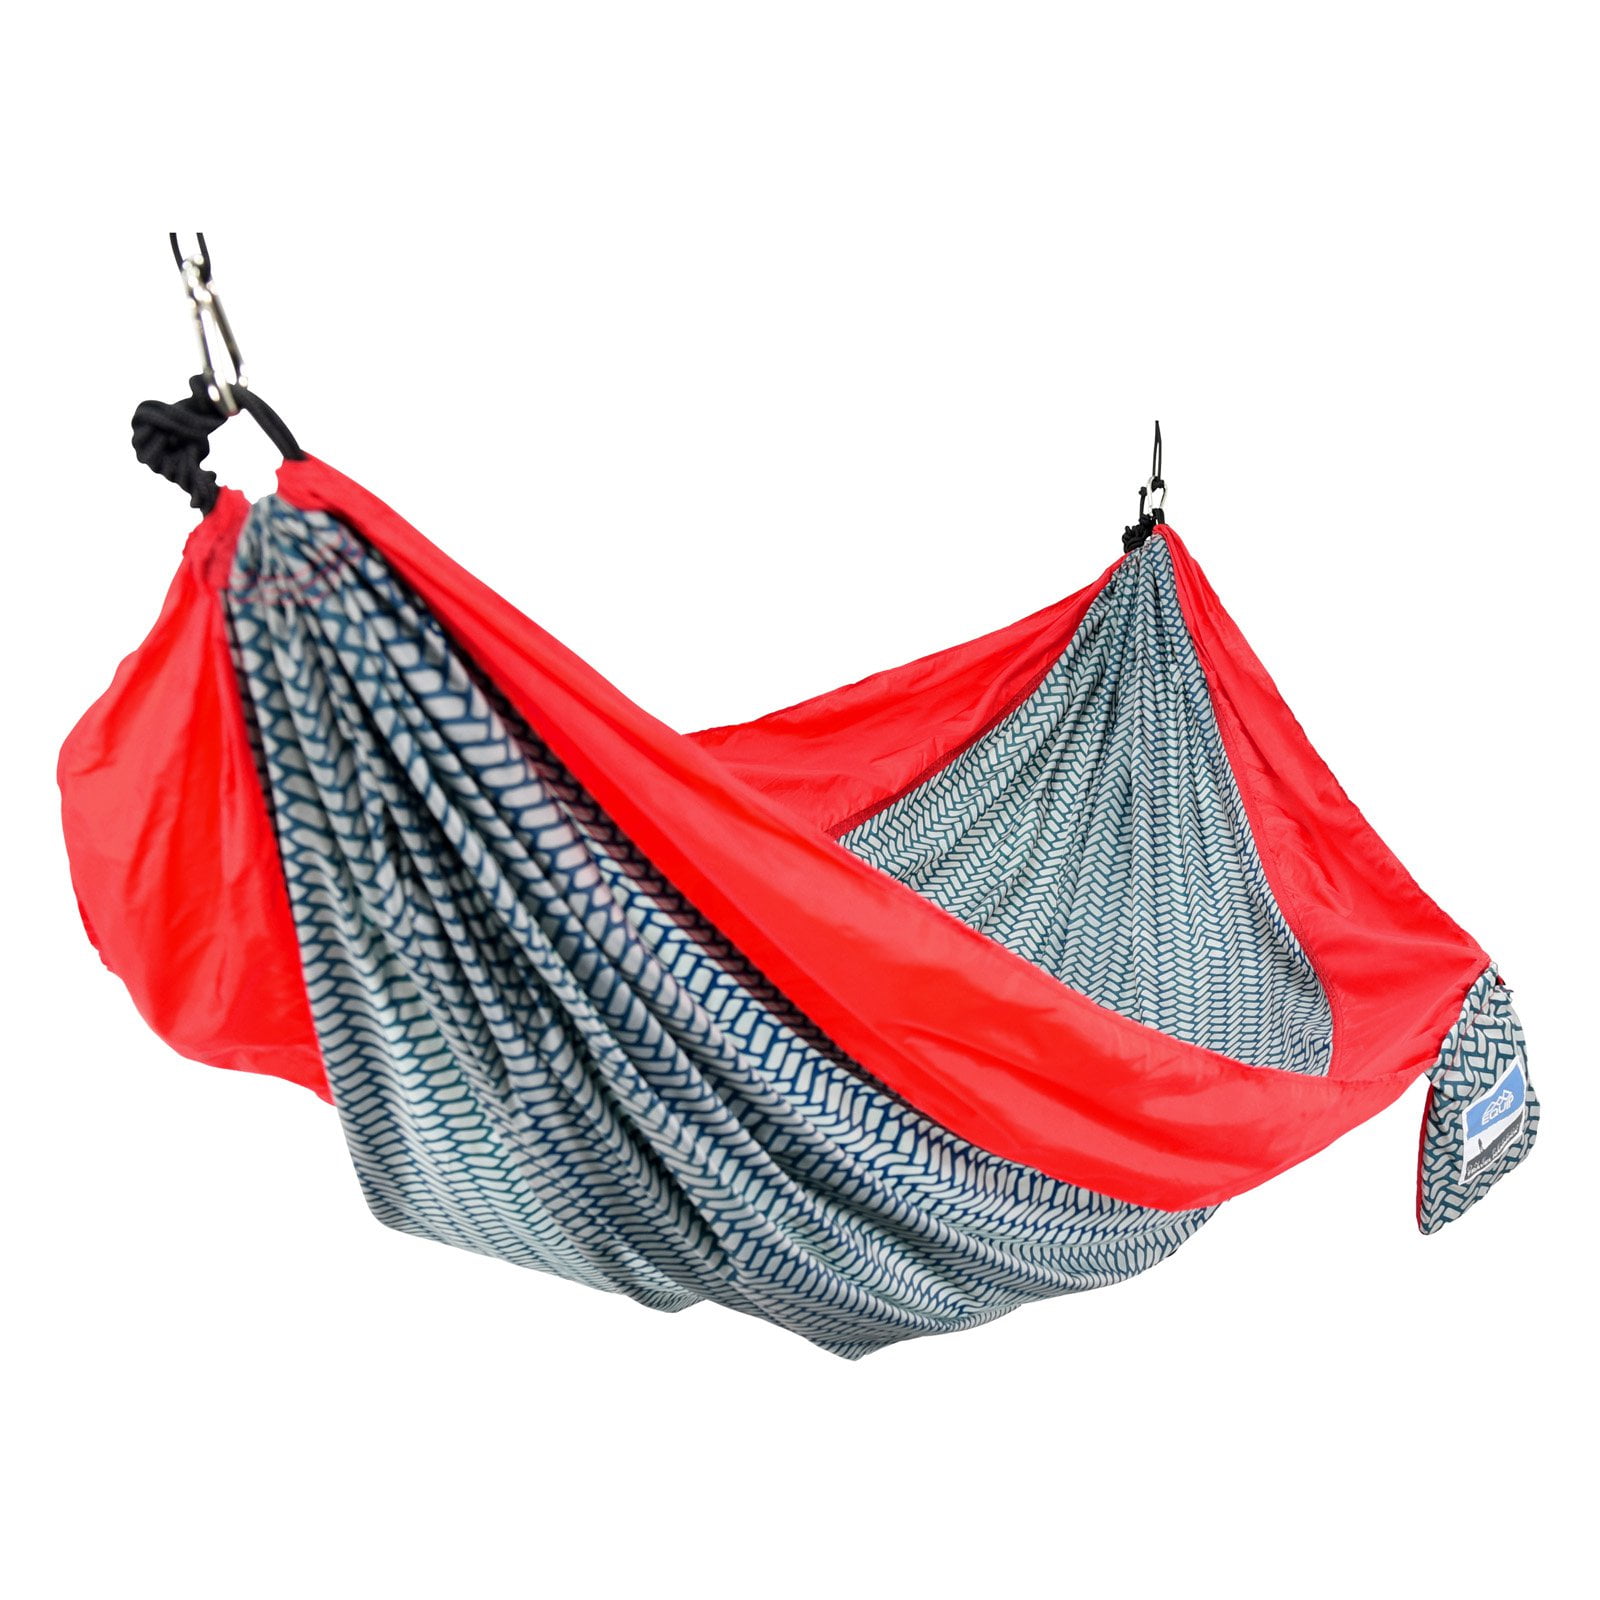 one person travel hammock